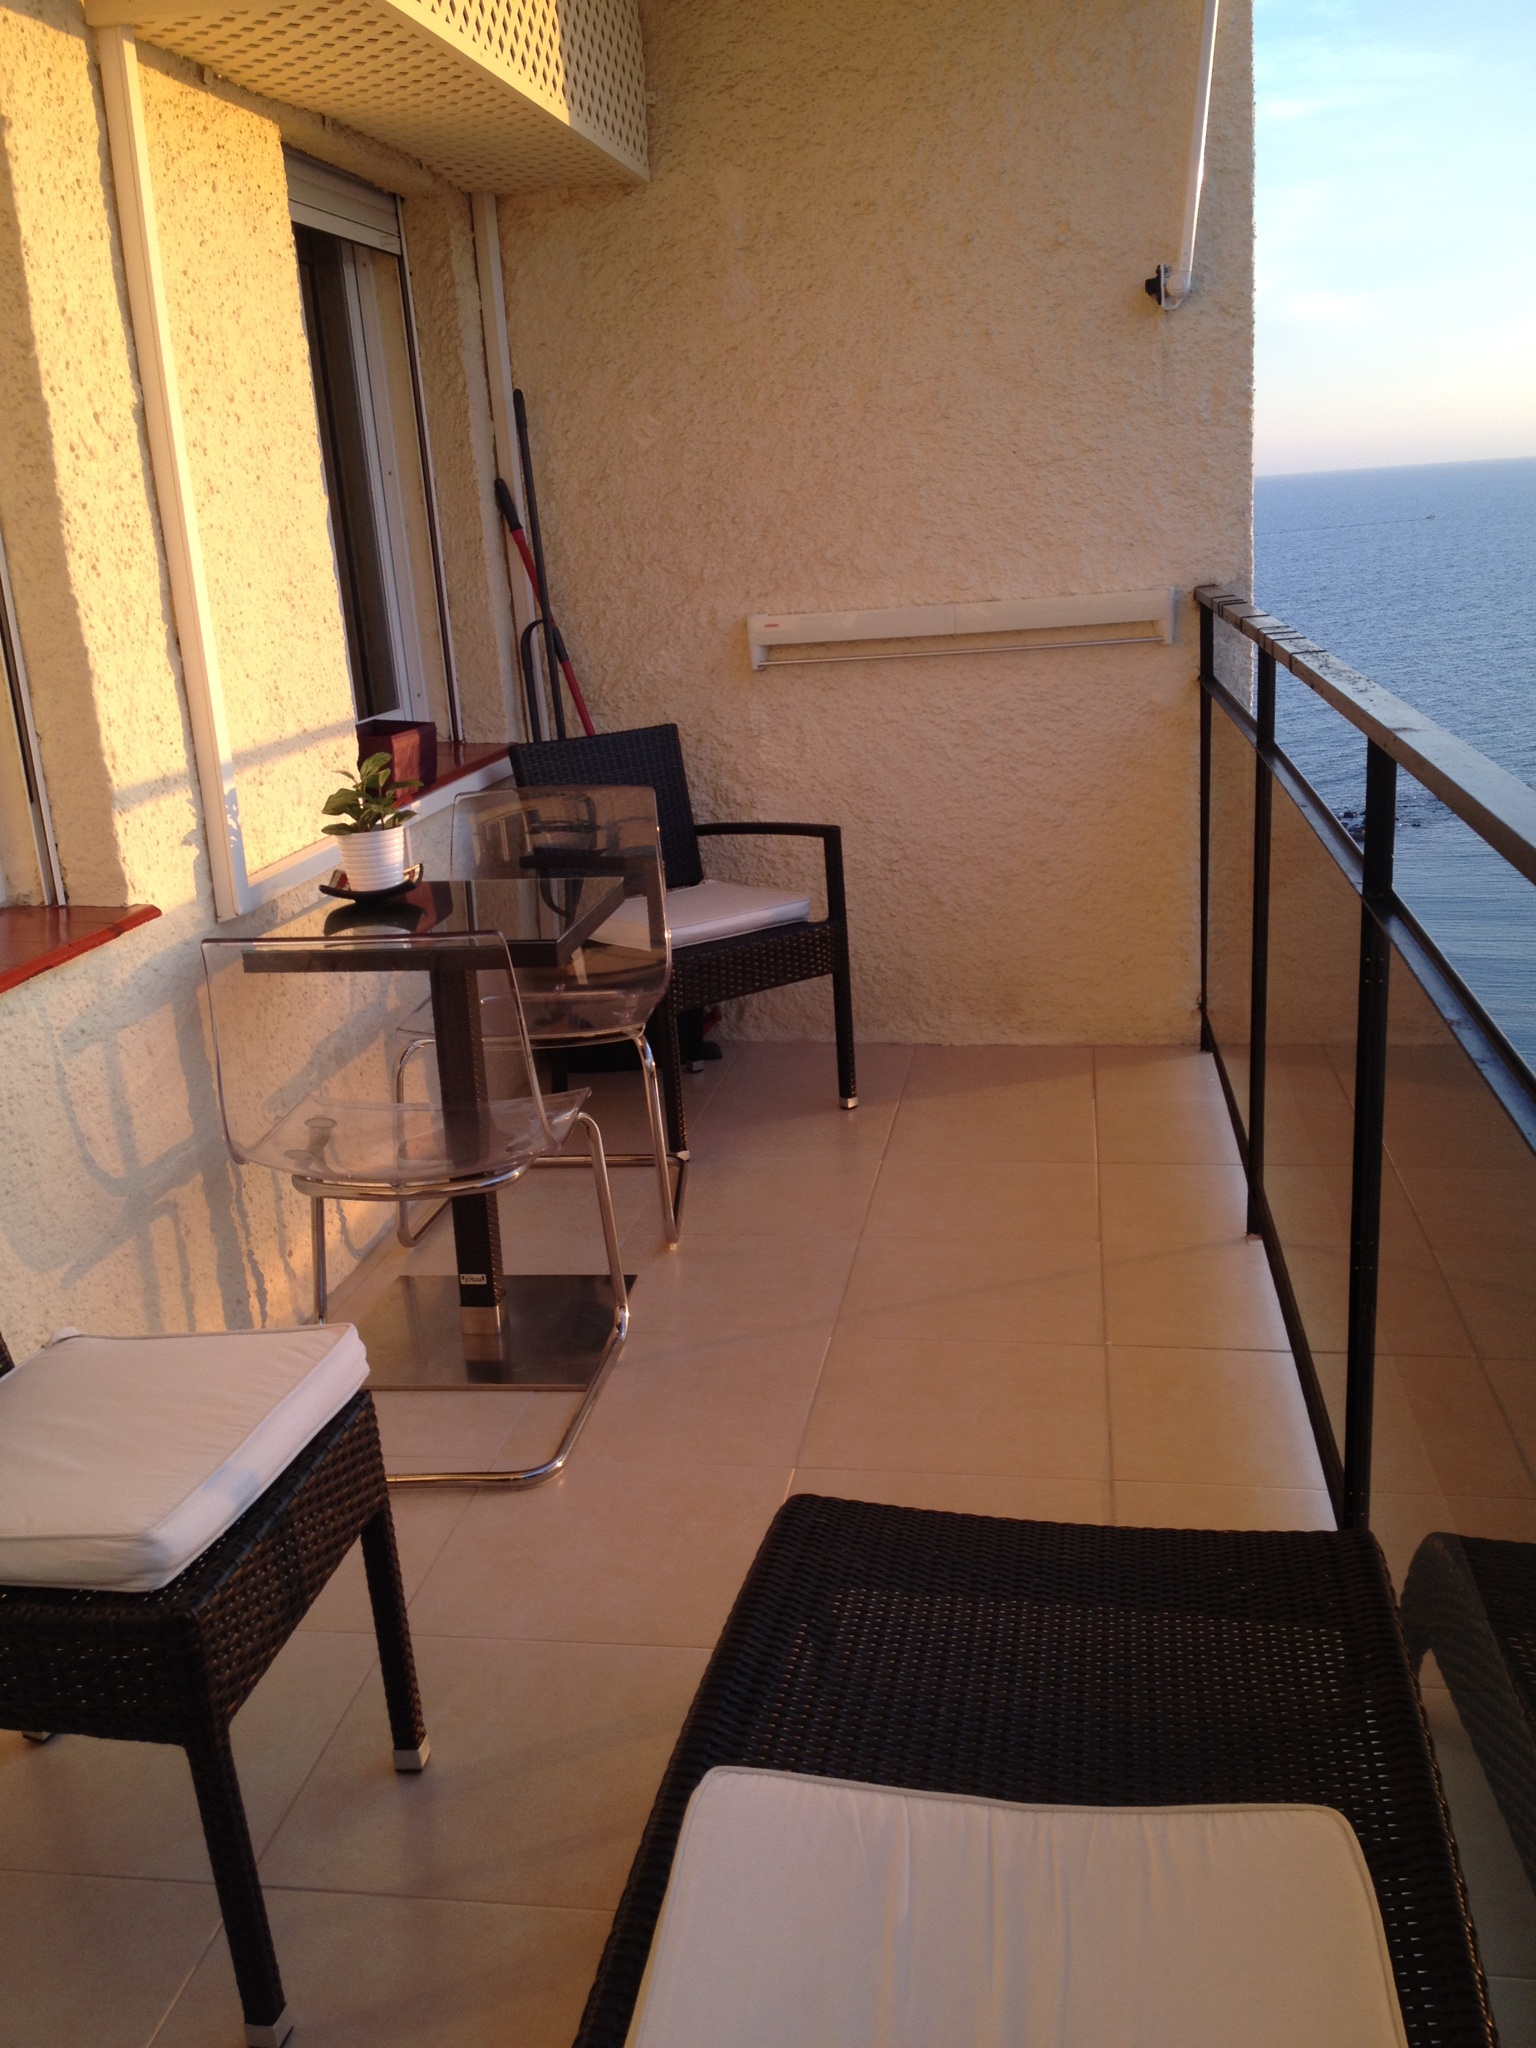 Skol apartments, Marbella - apartment 811A - balcony